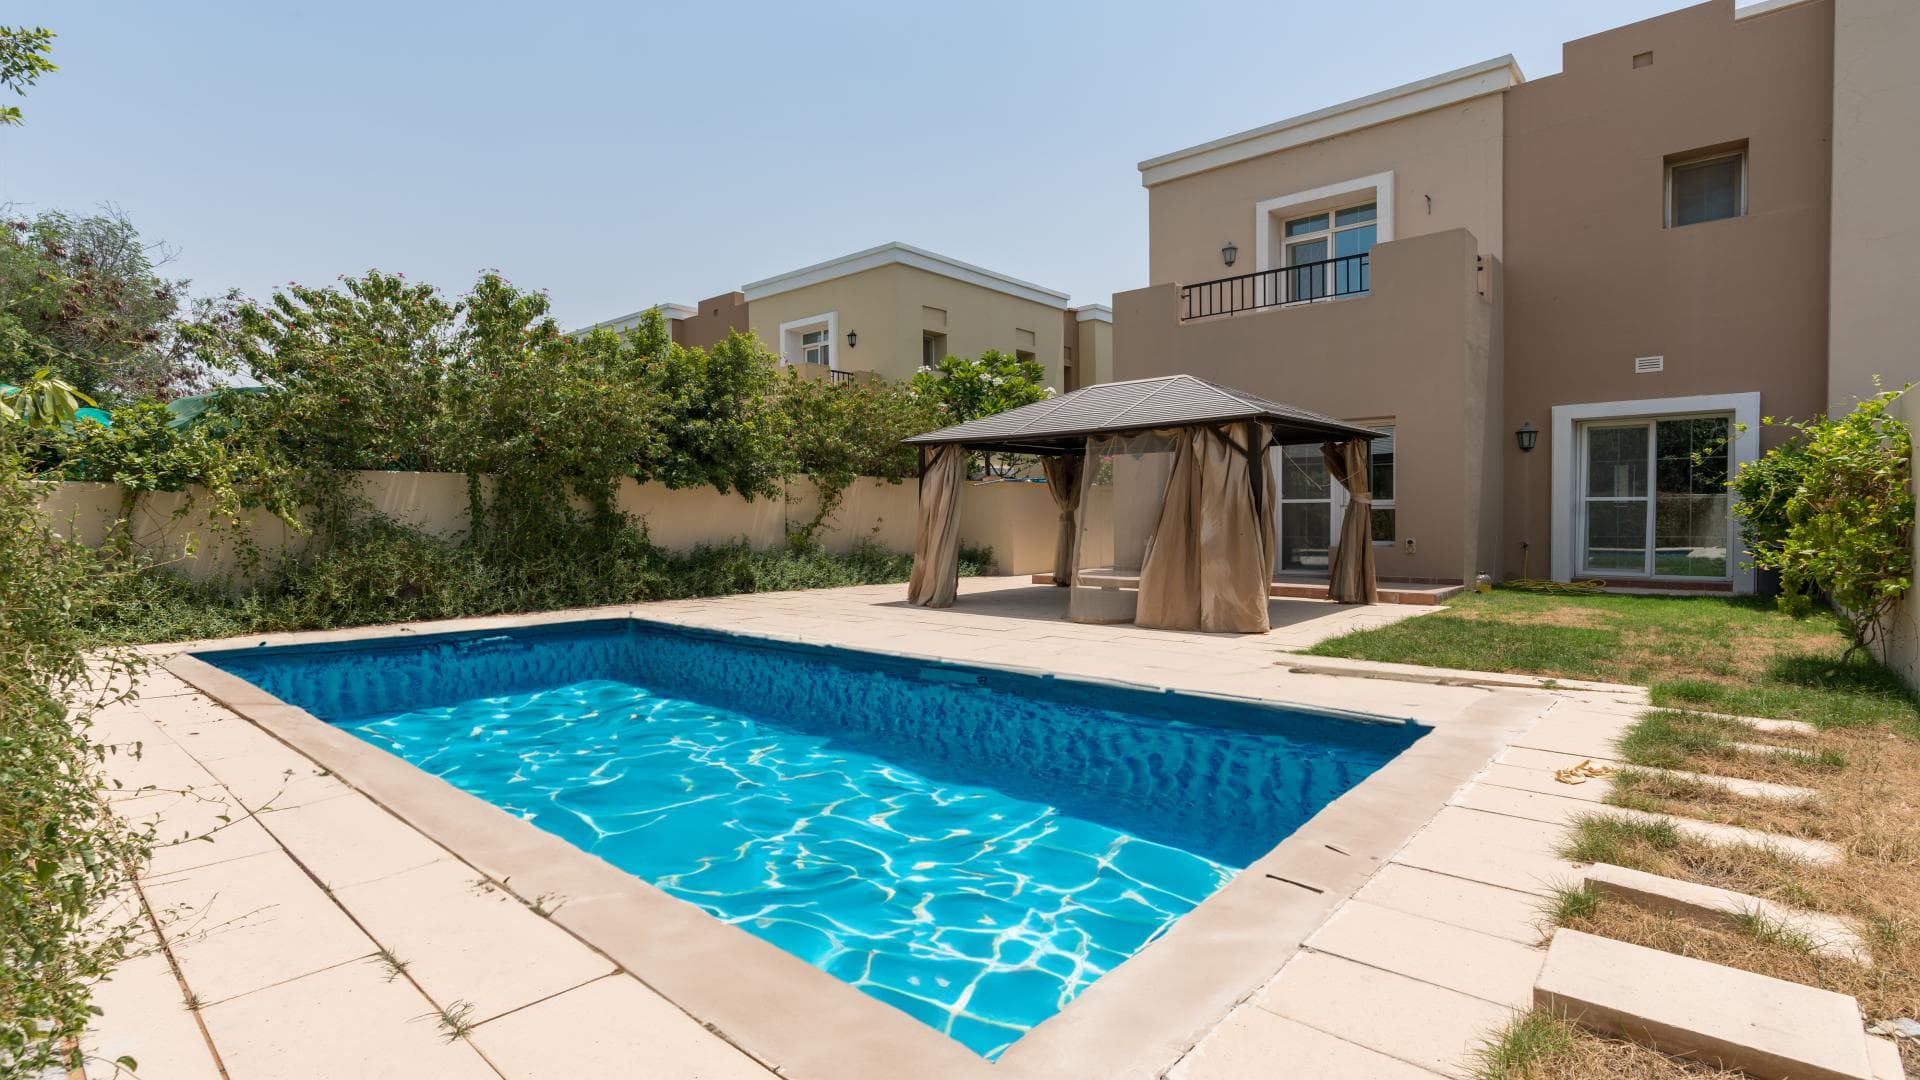 3 Bedroom Villa For Rent Jumeirah Business Centre 5 Lp34811 2b227f3218640a00.jpg